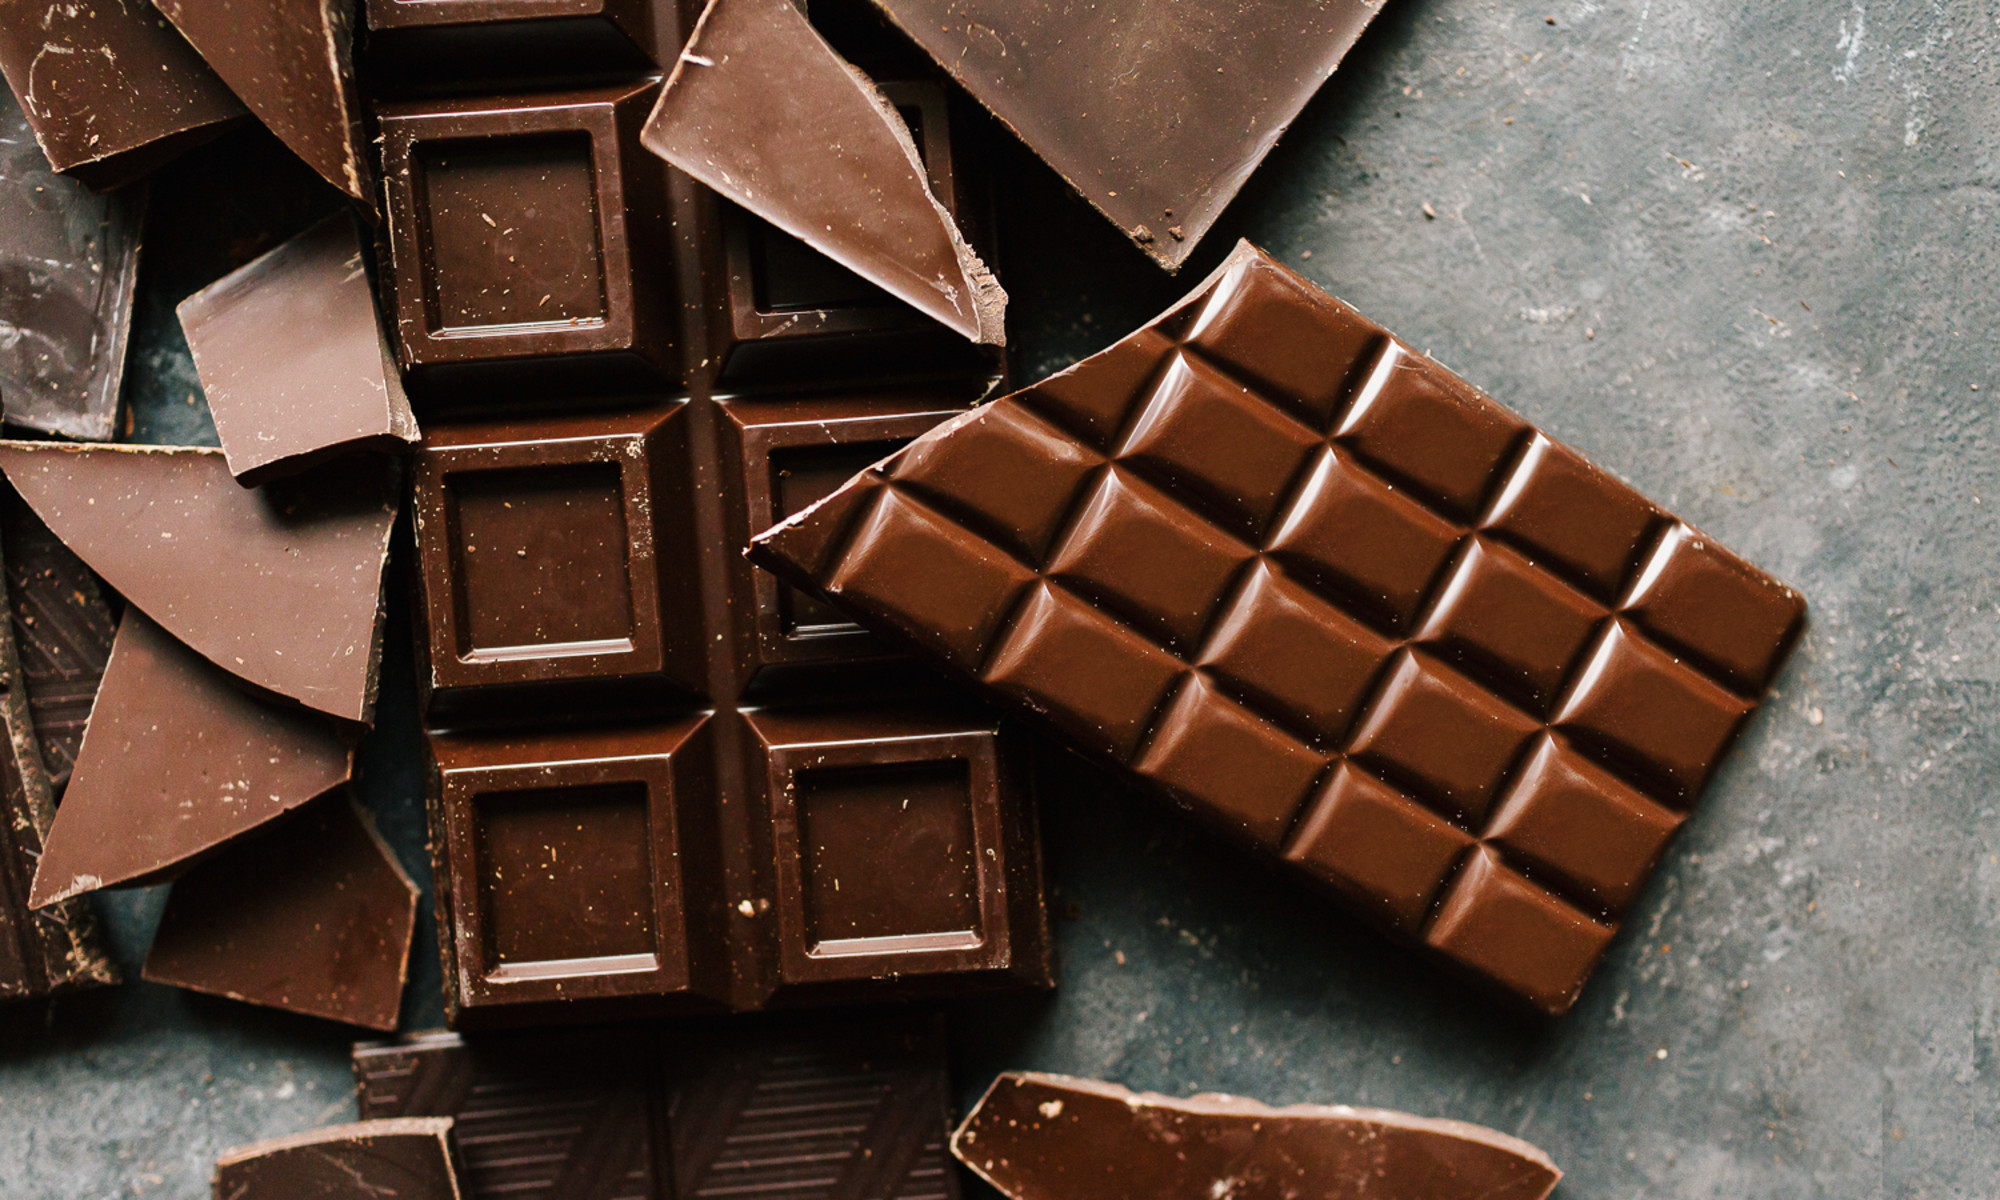 Где шоколад. Шоколад белый против чёрного. Chocolate pattern. შოკოლადი photo.